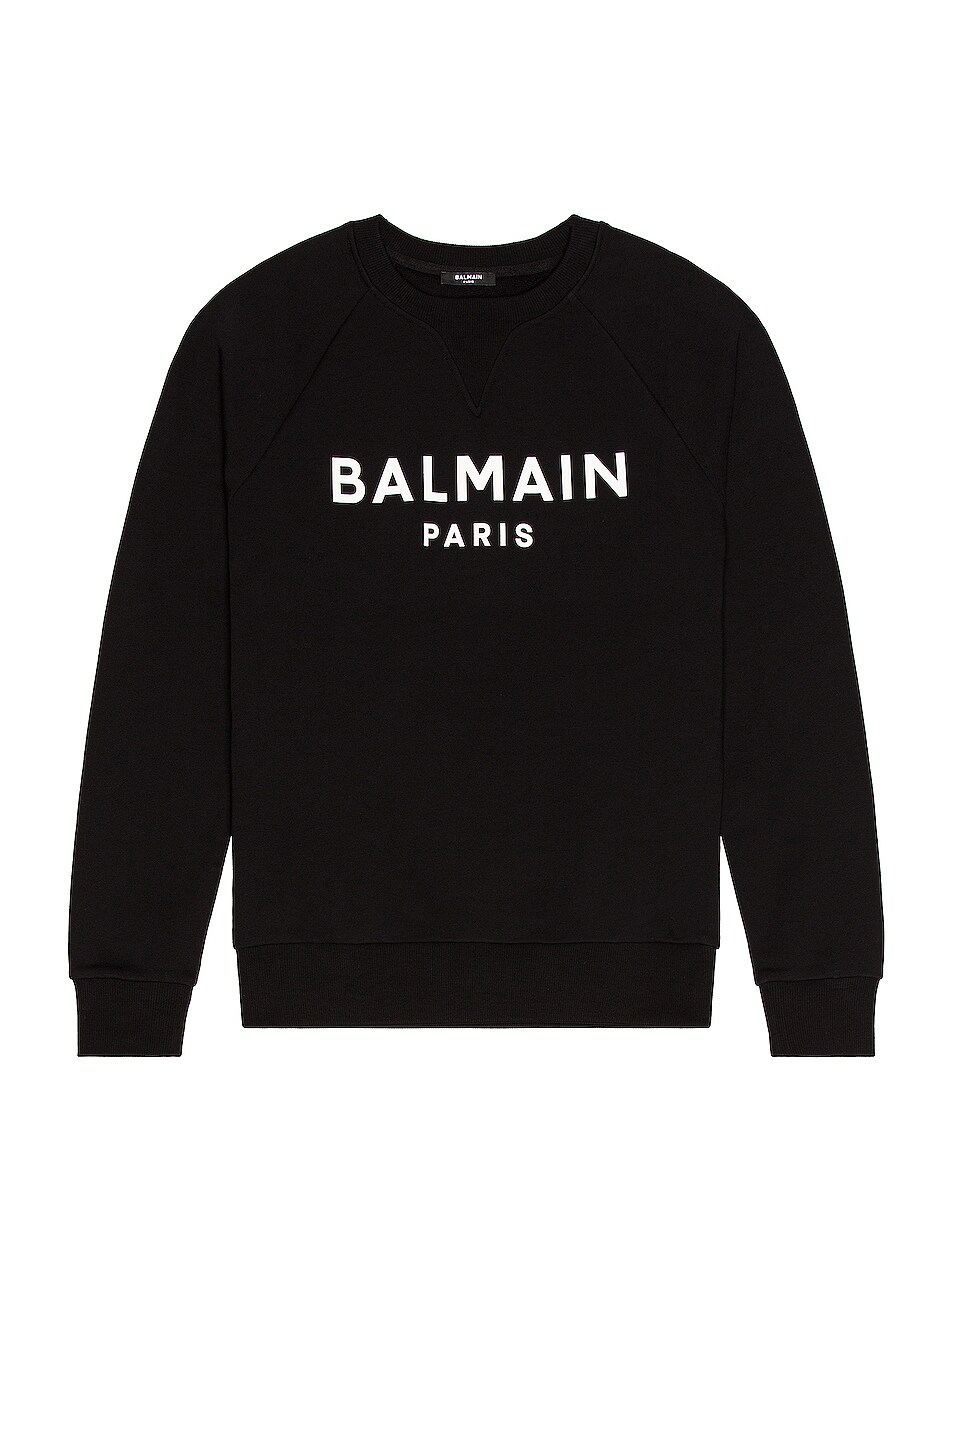 Image 1 of BALMAIN Printed Sweatshirt in Black & White